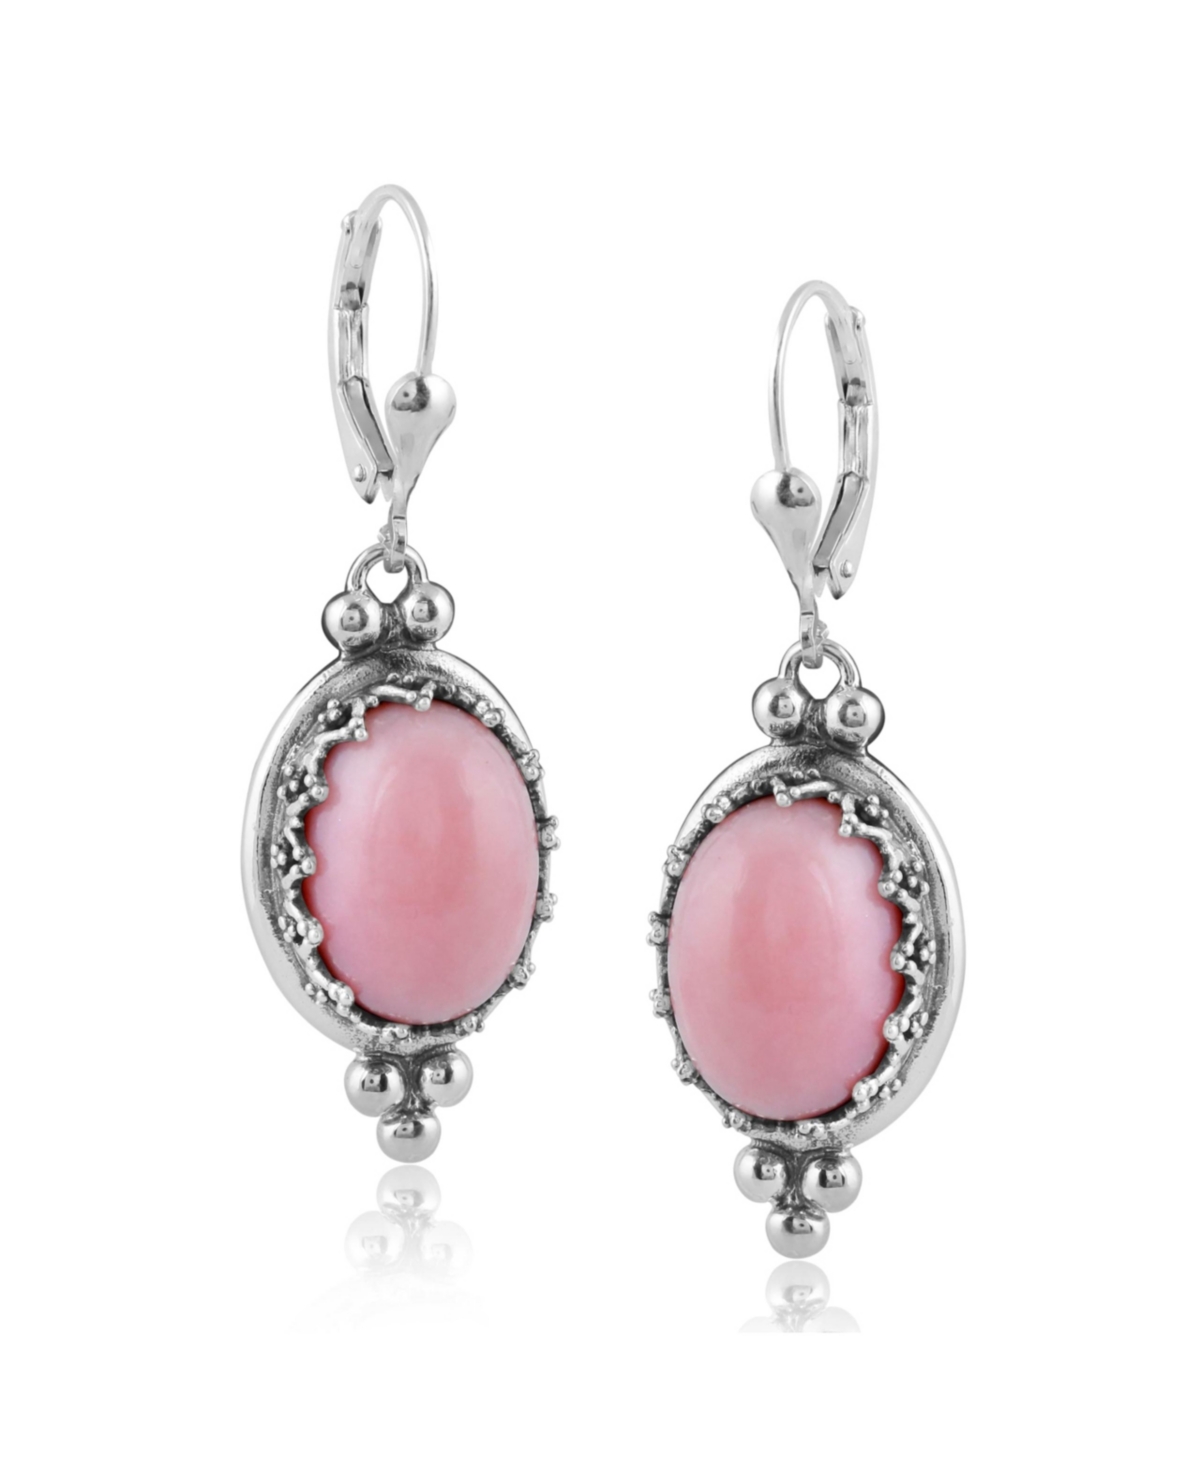 Genuine Gemstone Sterling Silver Crown Detail Lever Back Earring - Pink opal